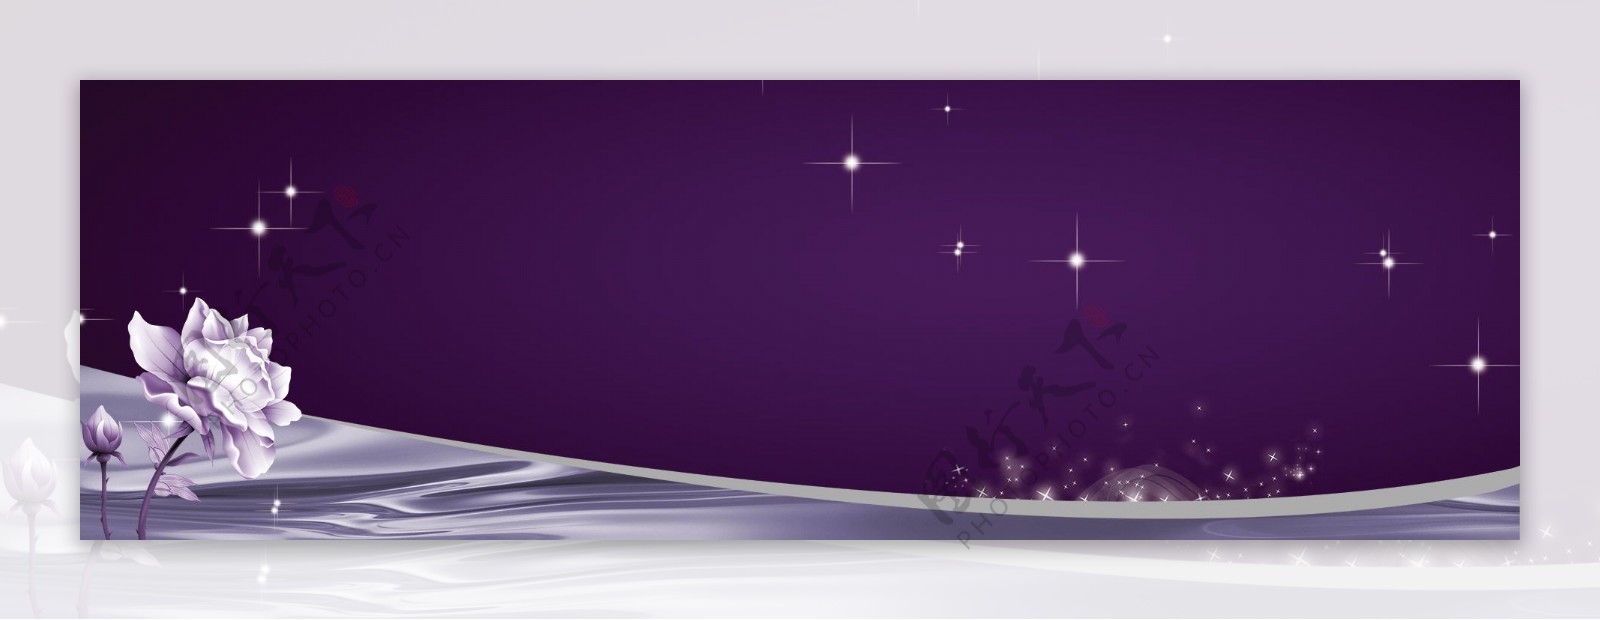 紫色奢华珠宝背景banner